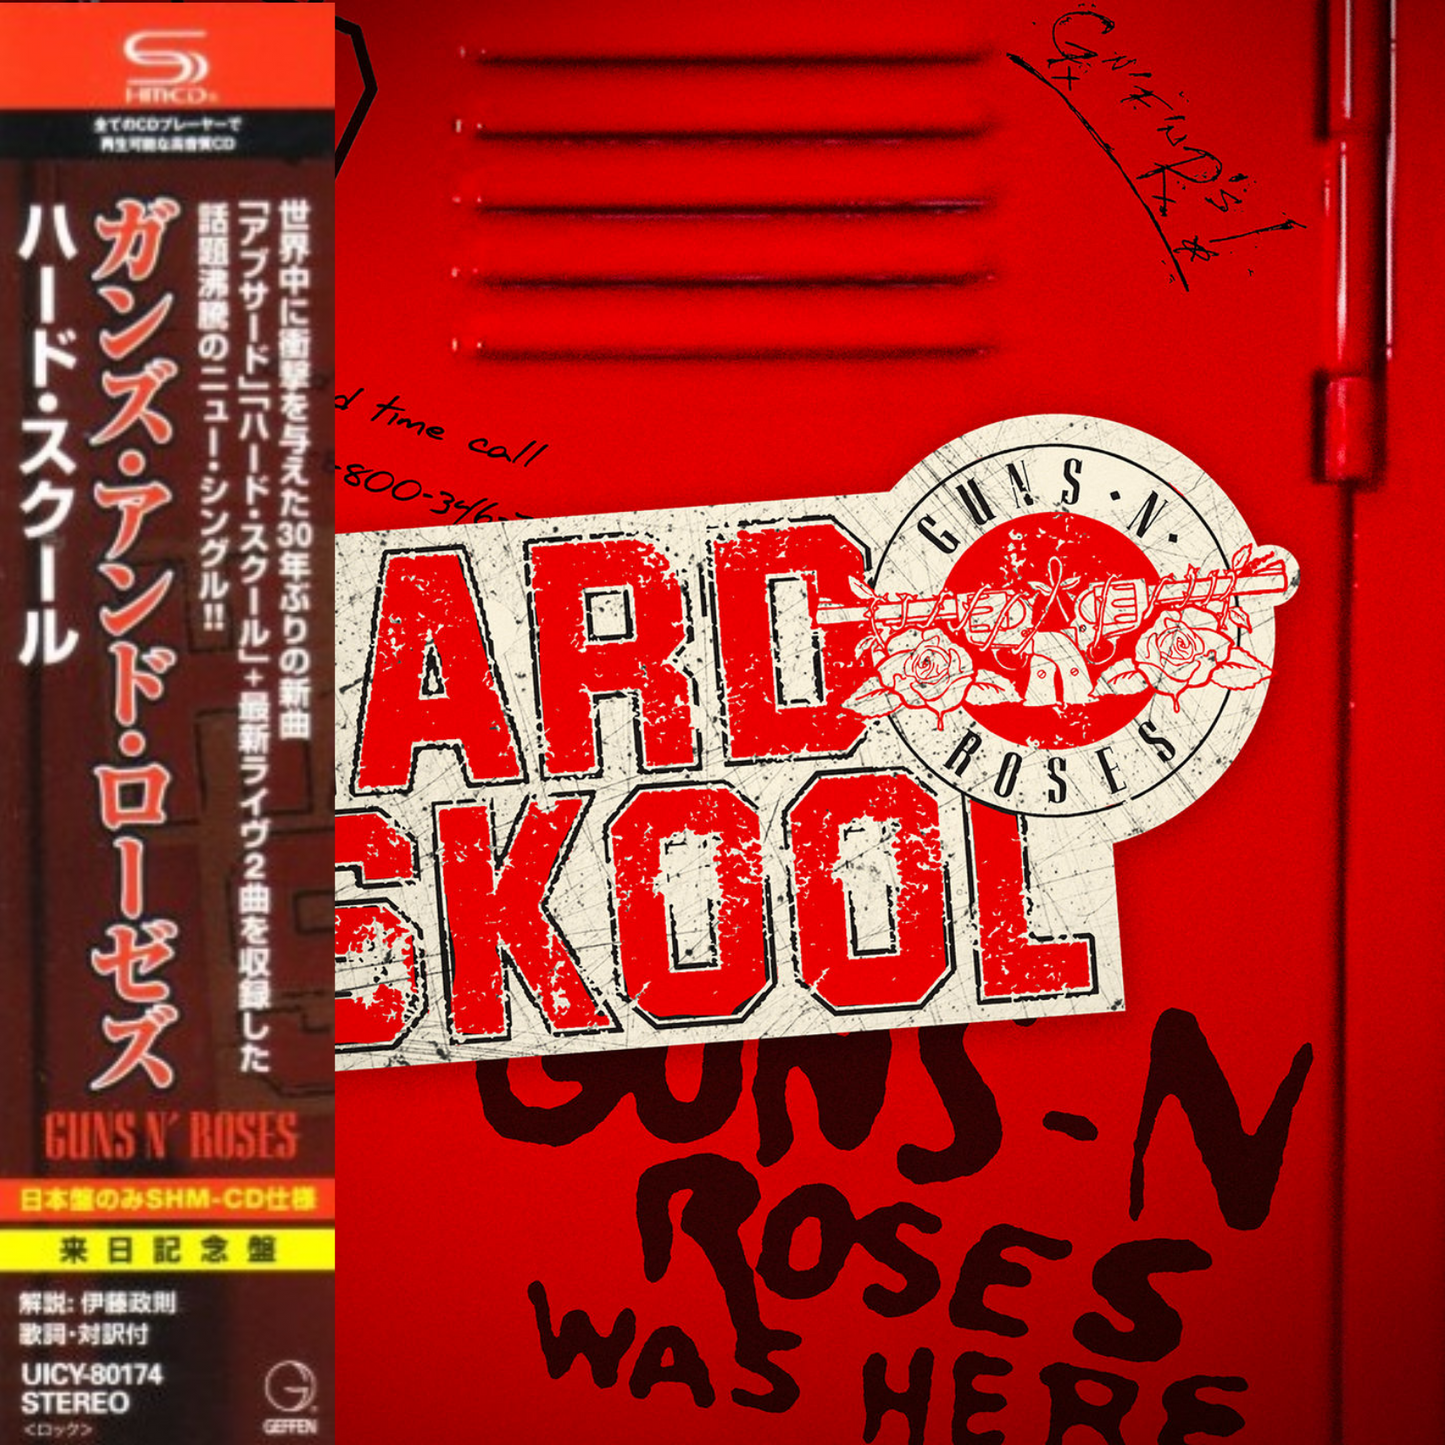 Guns-n_Roses_Hard_Skool_Special_Edition_Japan_CD